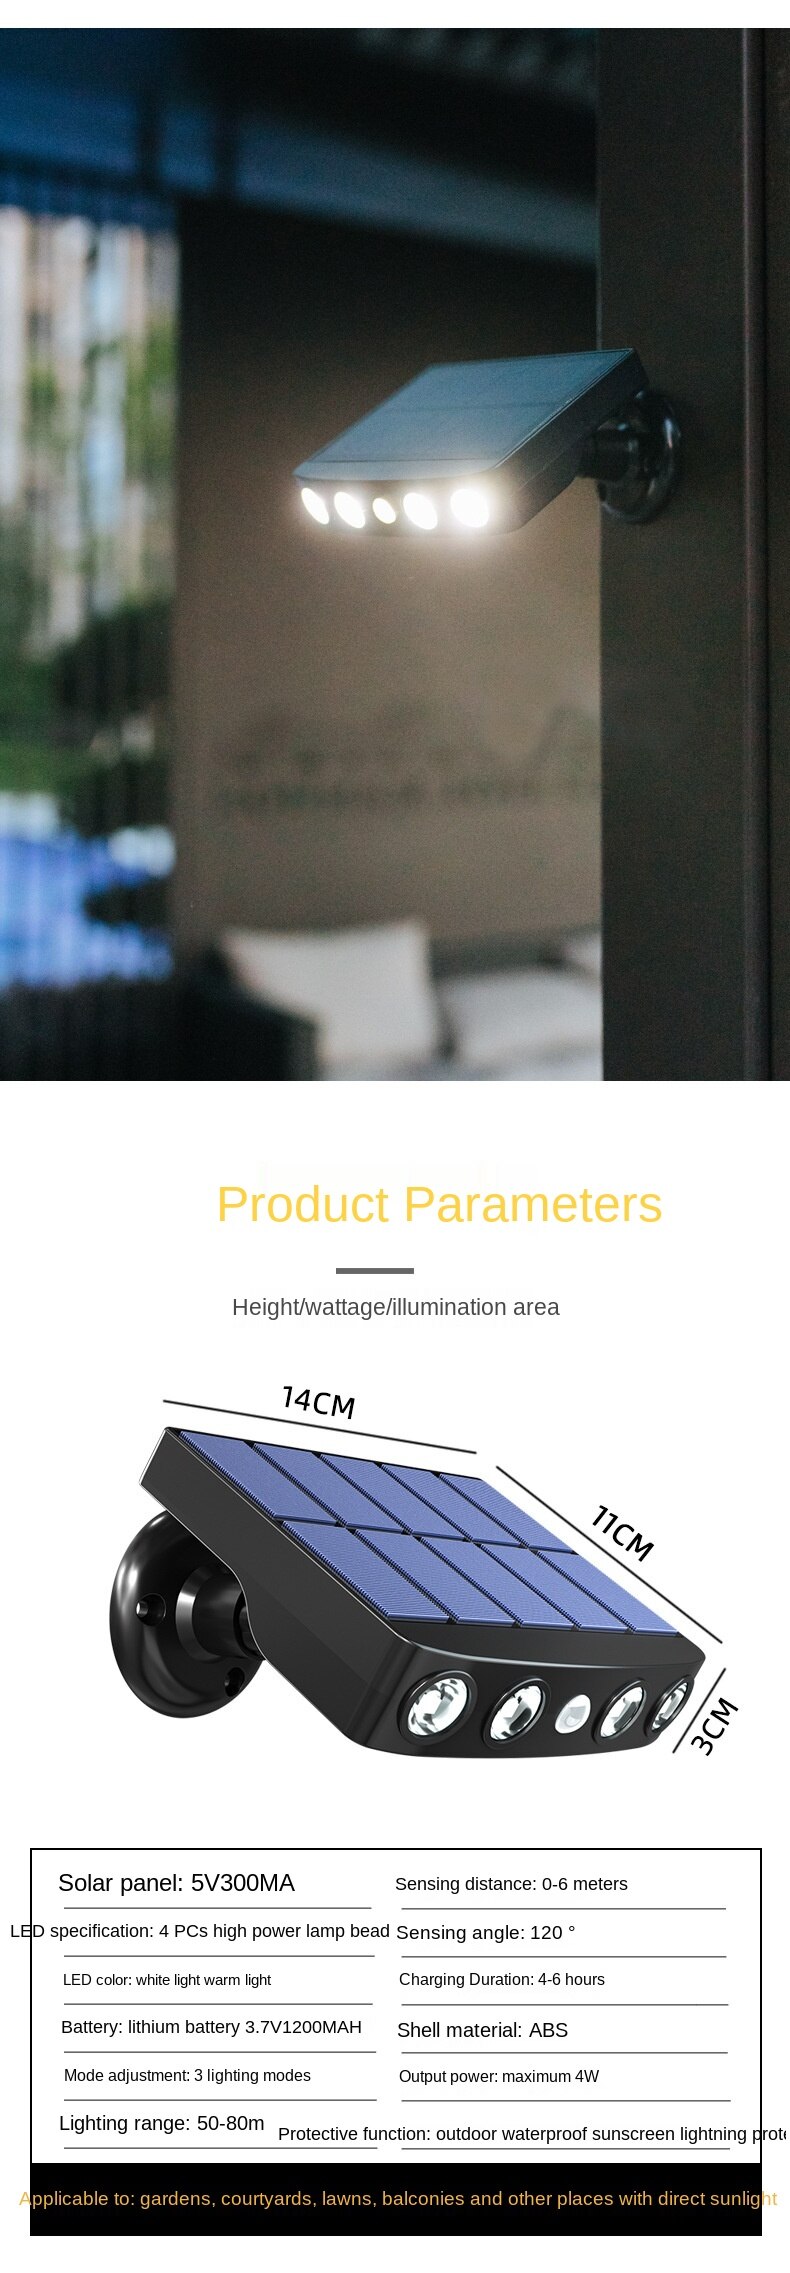 Powerful Solar Powered Led Wall Light Outdoor Motion Sensor Waterproof IP65 Lighting for Garden Path Garage Yard Street Lamps